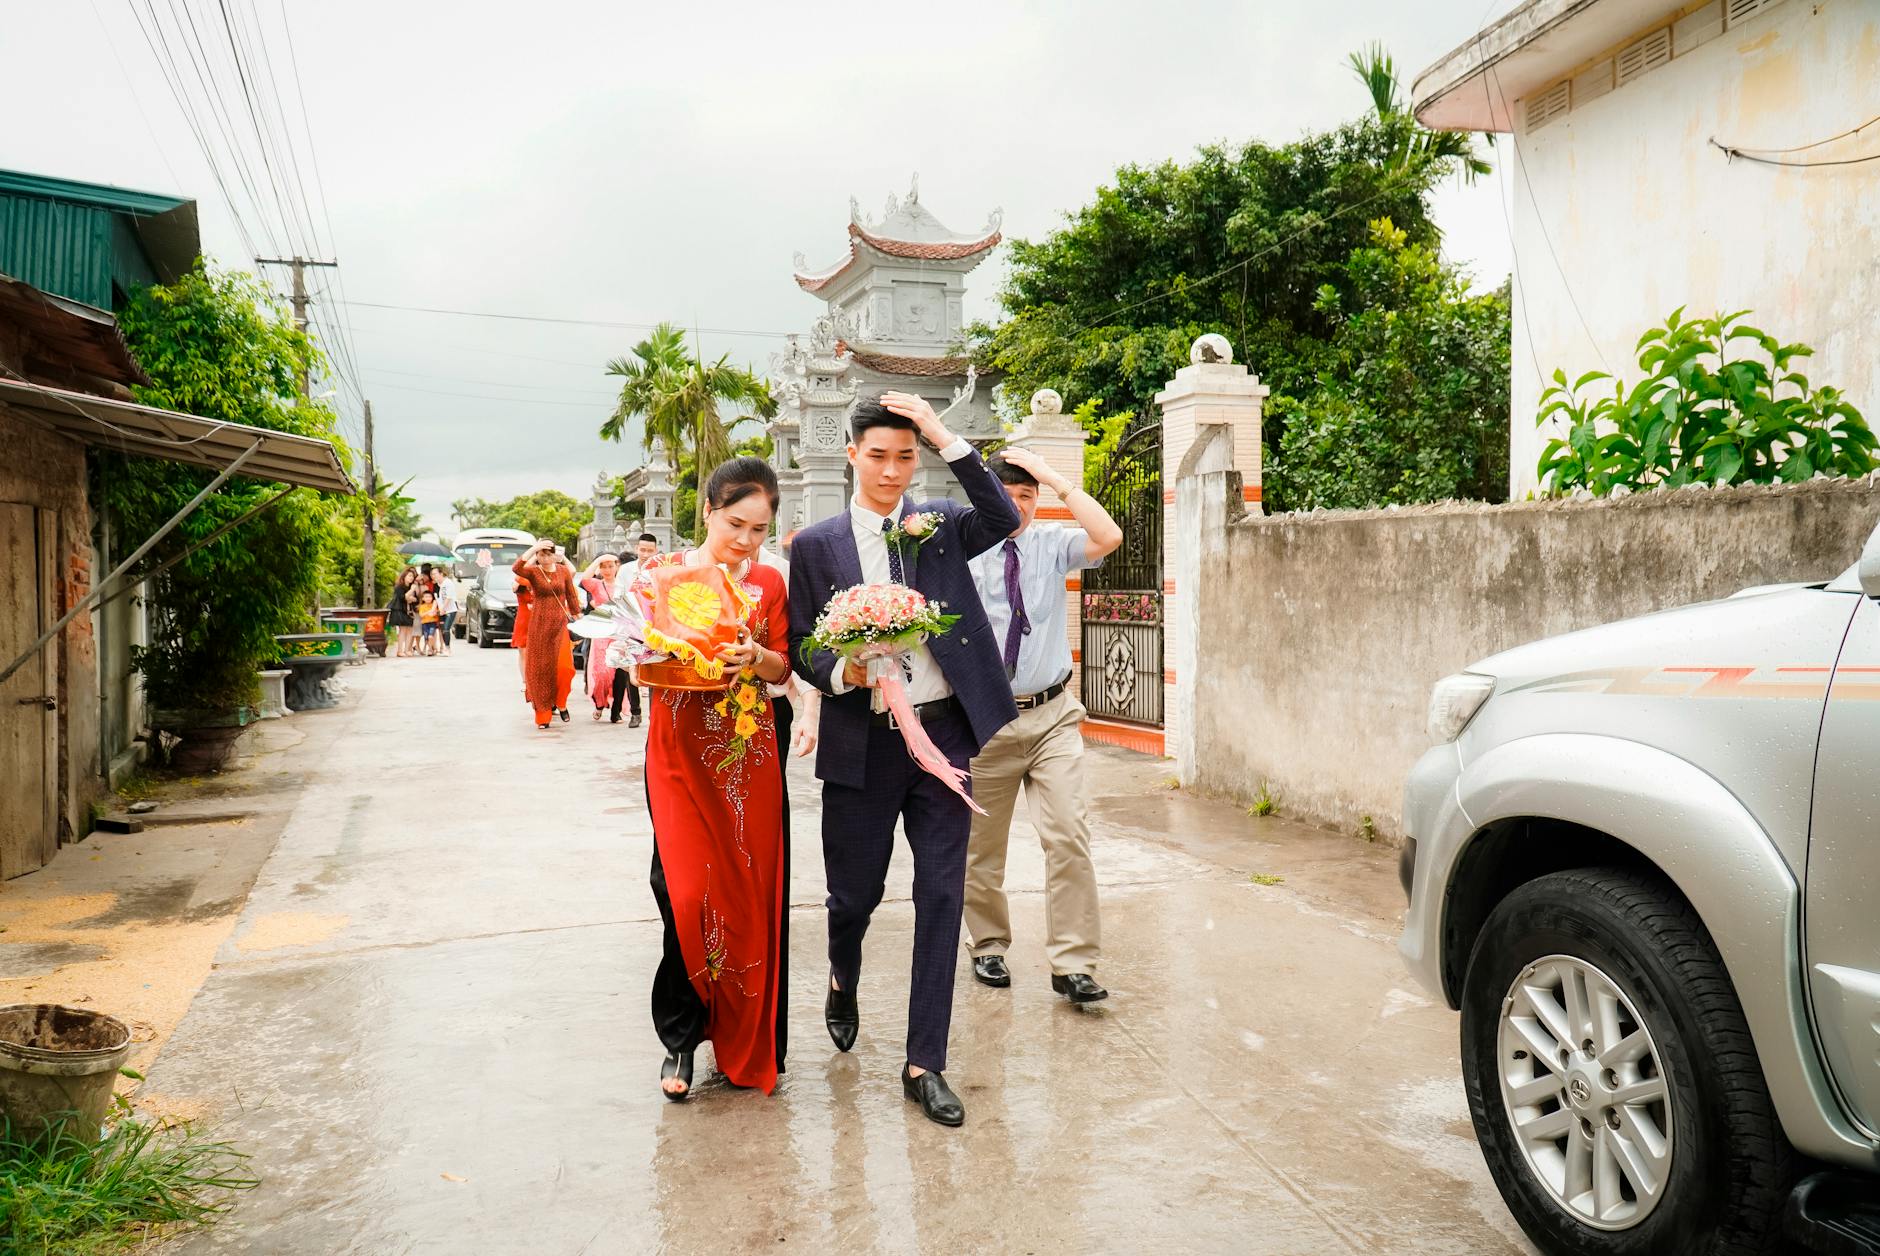 happy ethnic newlywed couple walking on street during traditional wedding ceremony